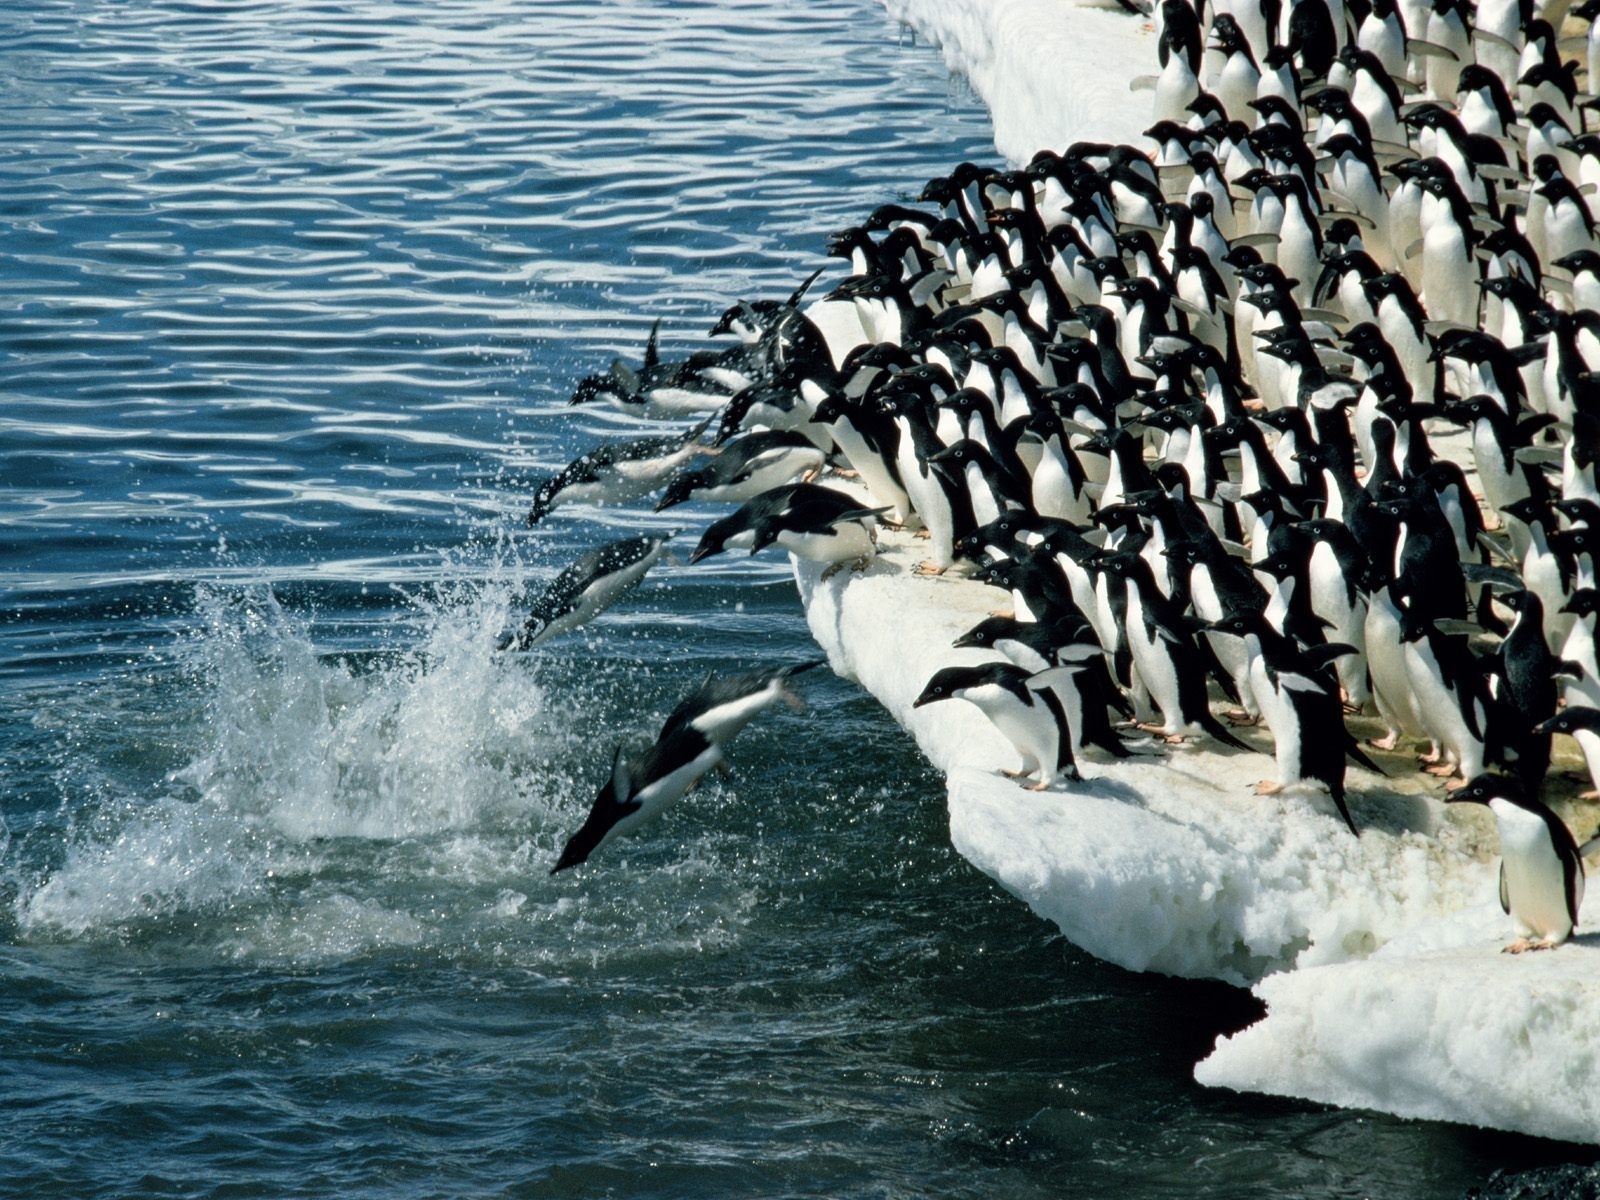 Миграция пингвинов в Антарктиде